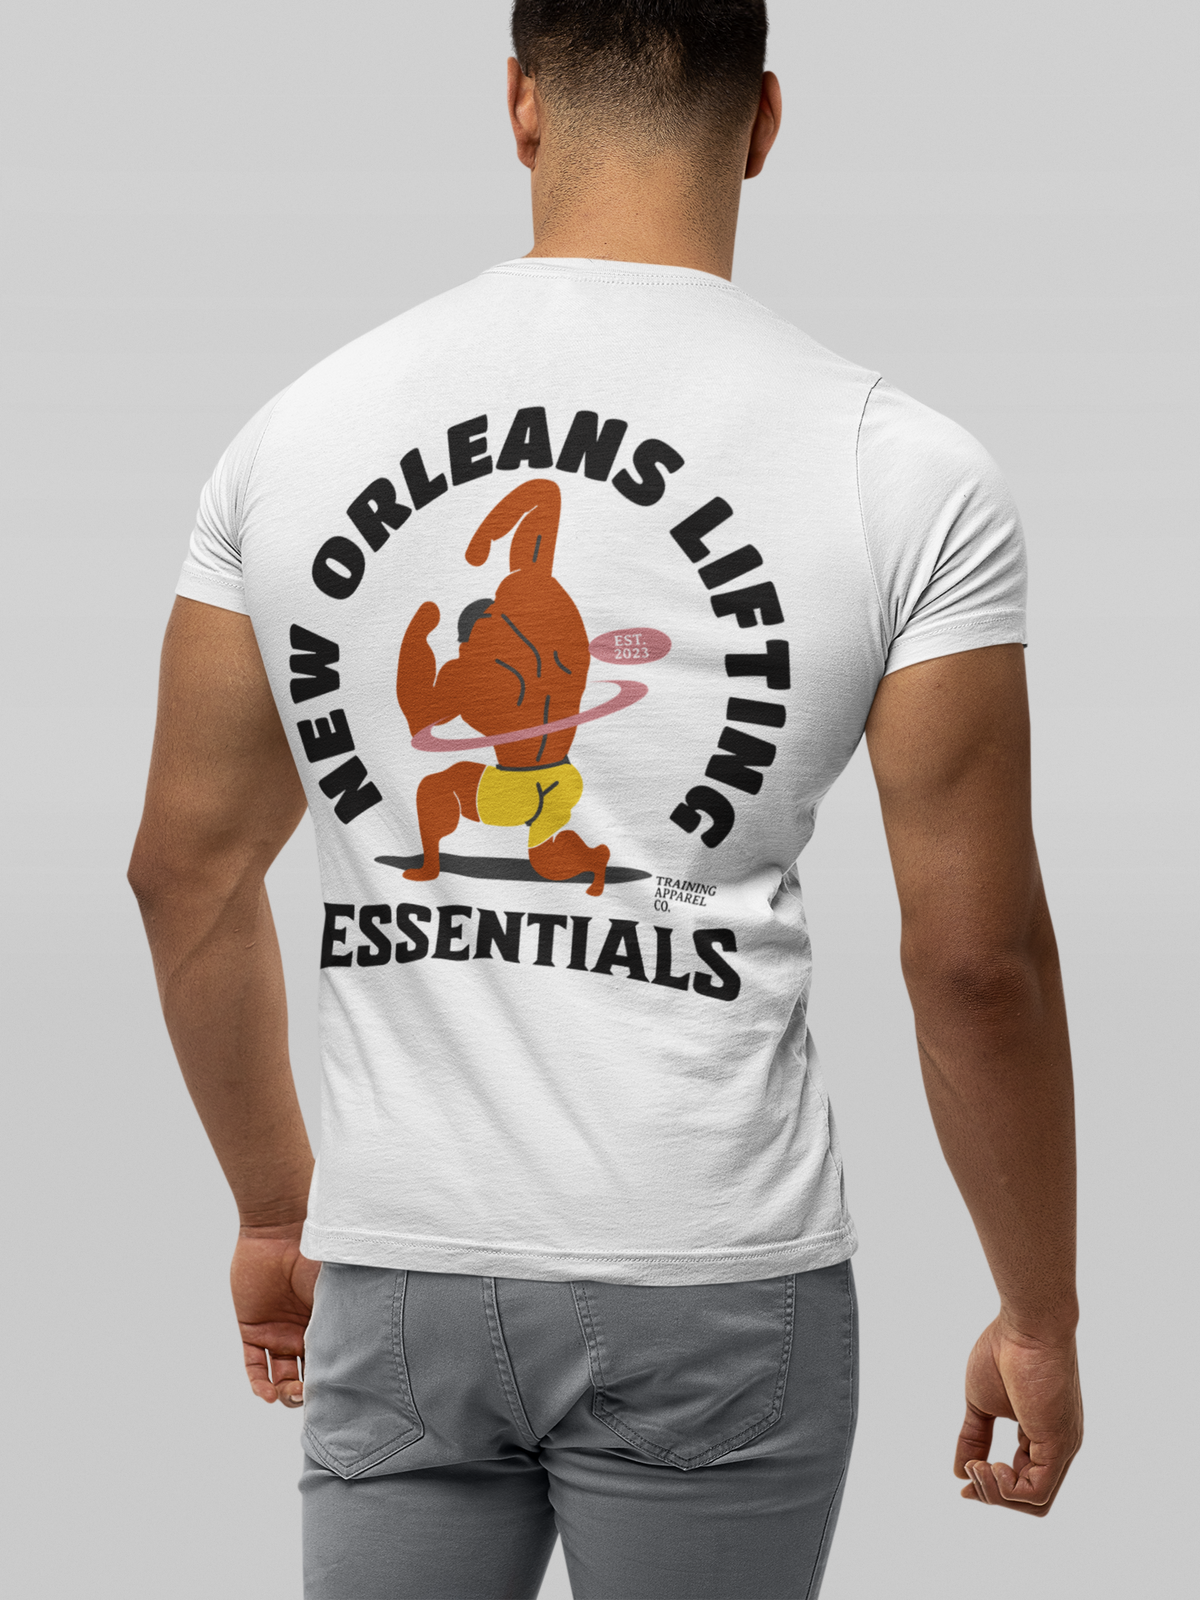 DanielEden Premium Sport shirt " Heavy Lifting "